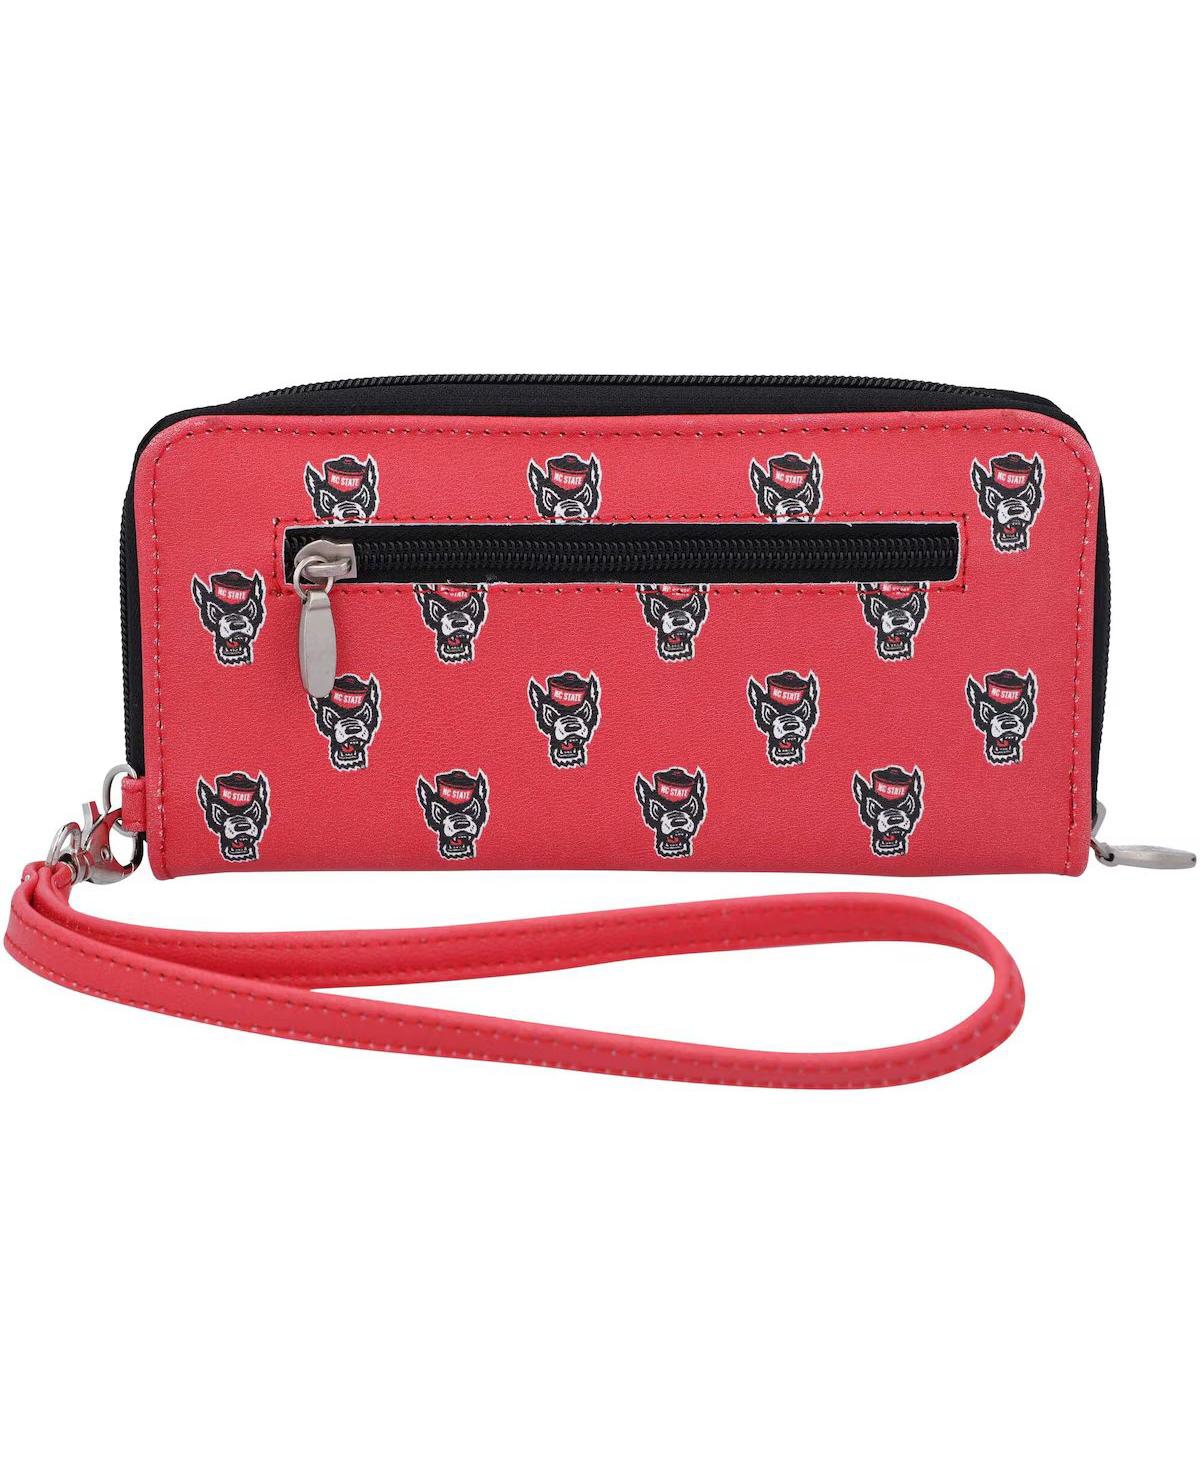 Women's Nc State Wolfpack Zip-Around Wristlet Wallet - Red